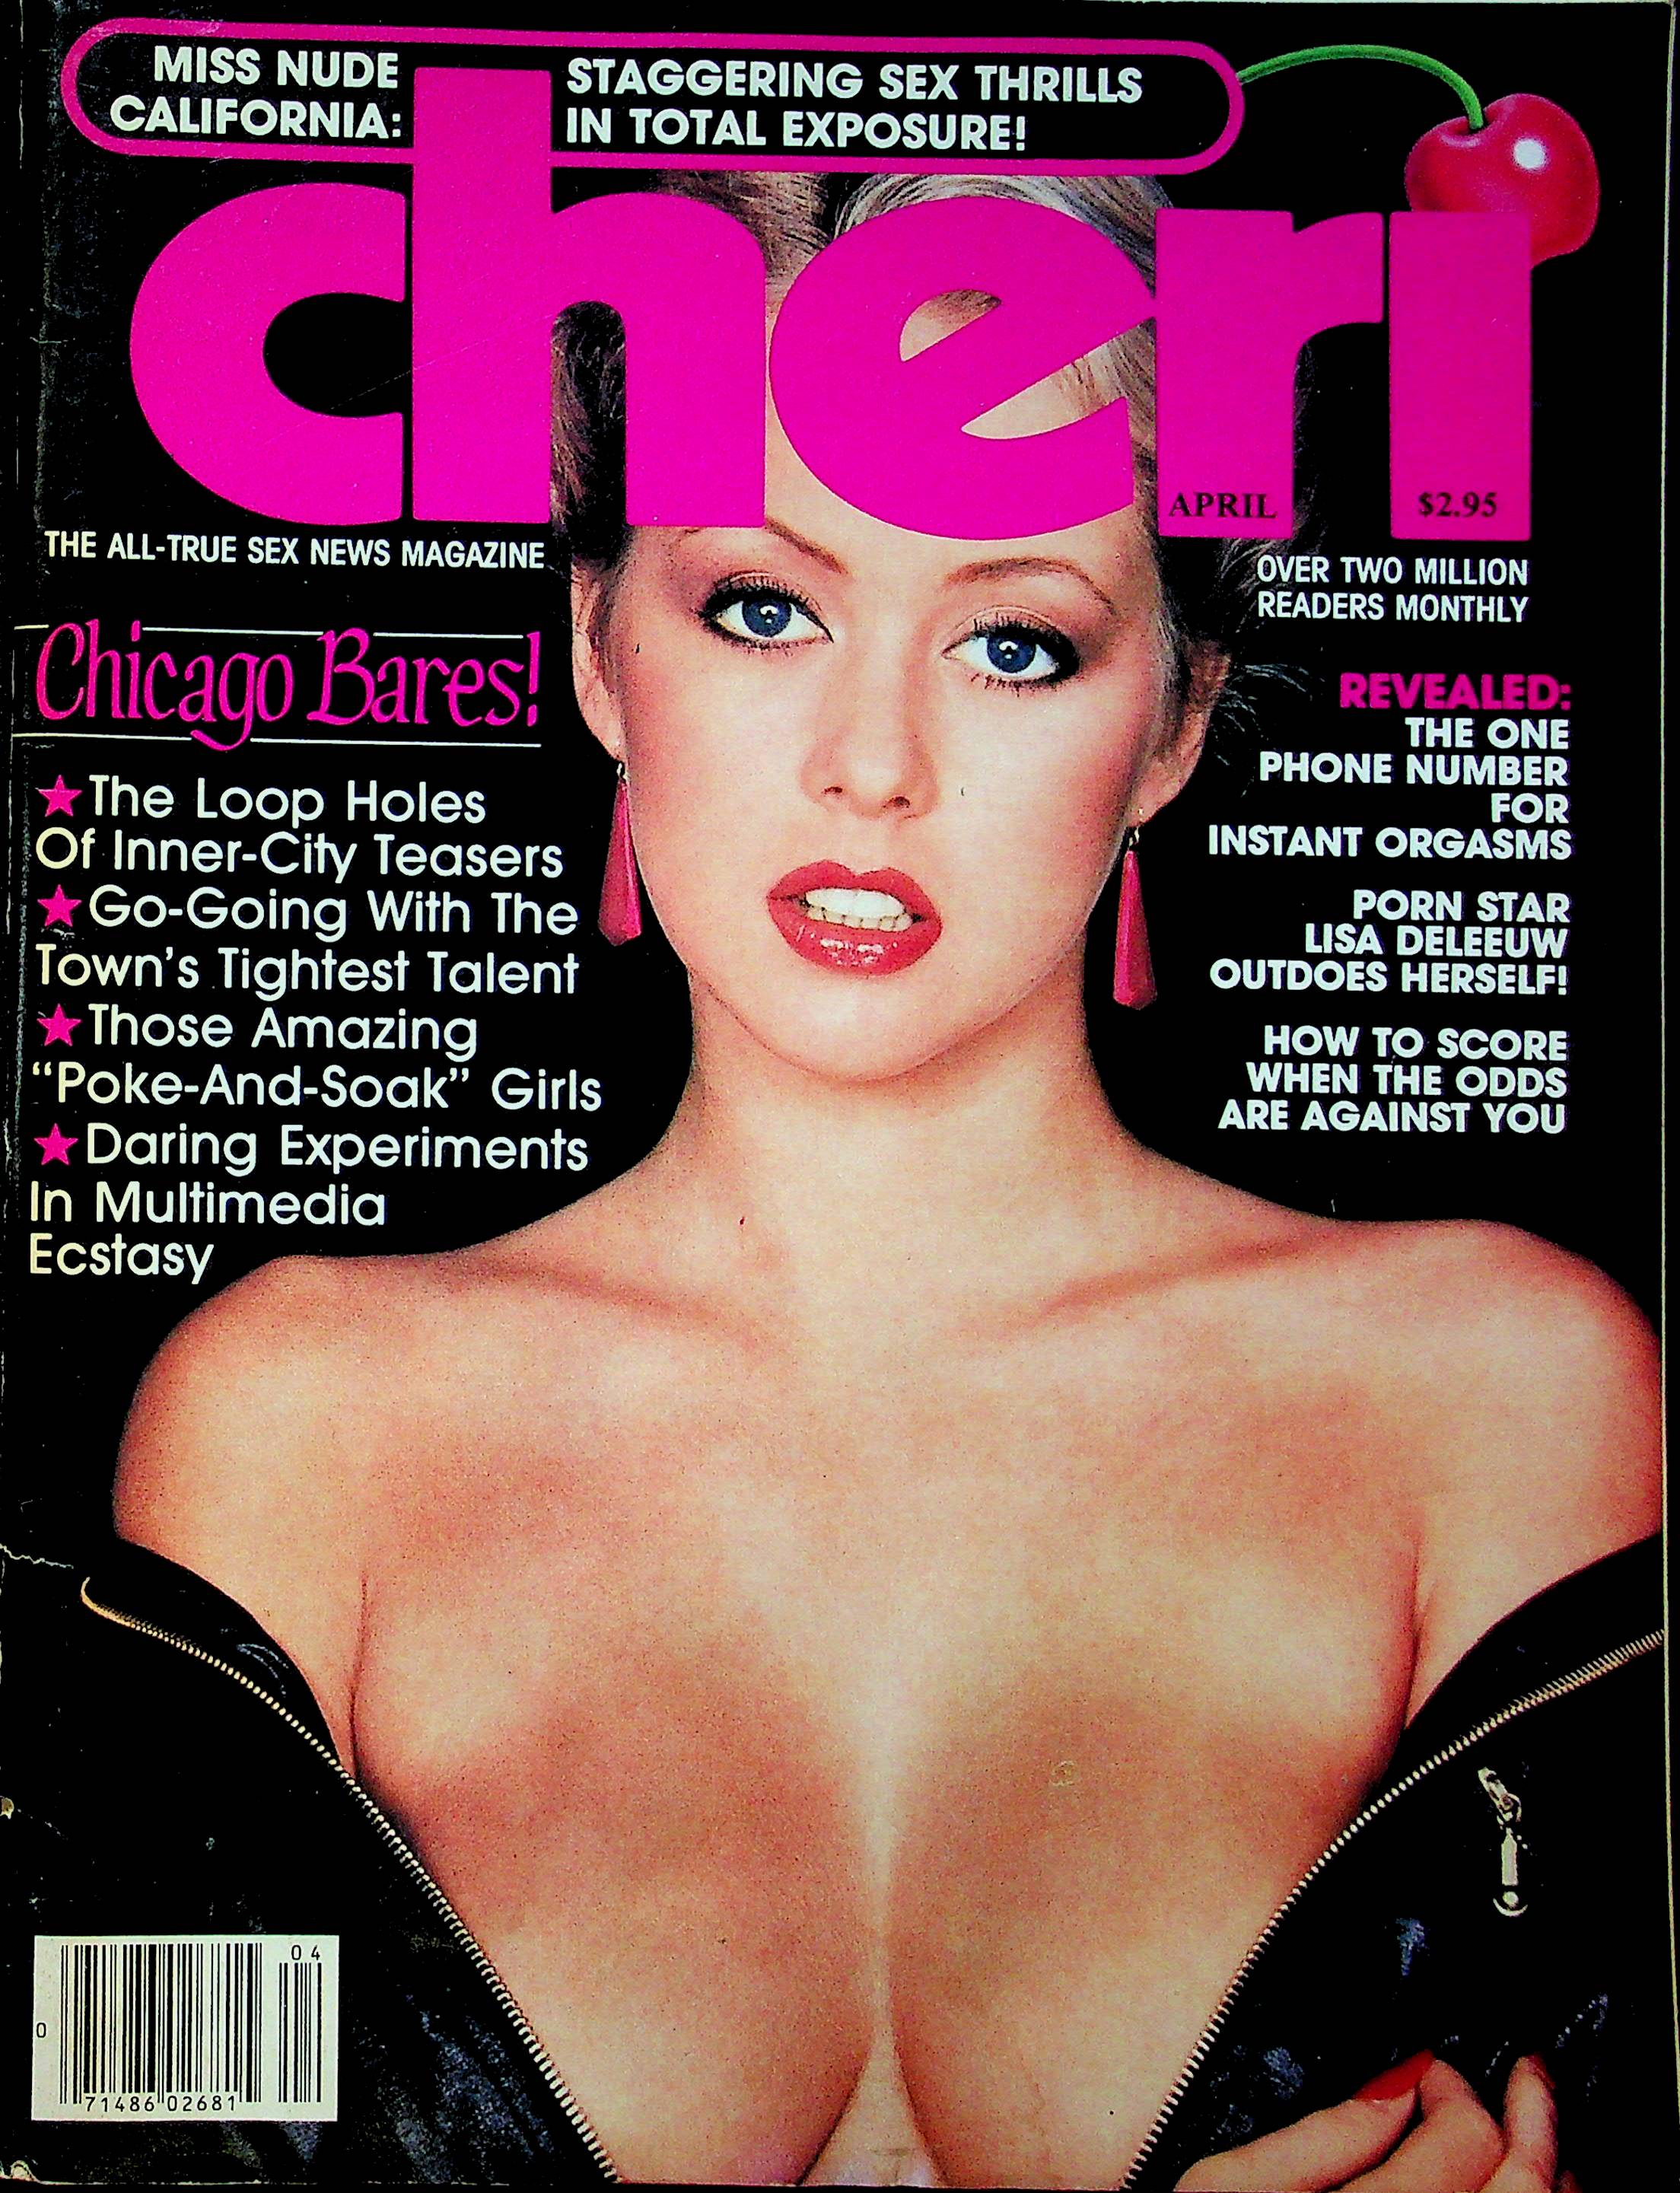 Miss Nude Stars - Cheri Magazine Lisa Deleeuw & Chicago Bares & Miss Nude California Apr â€“  Mr-Magazine